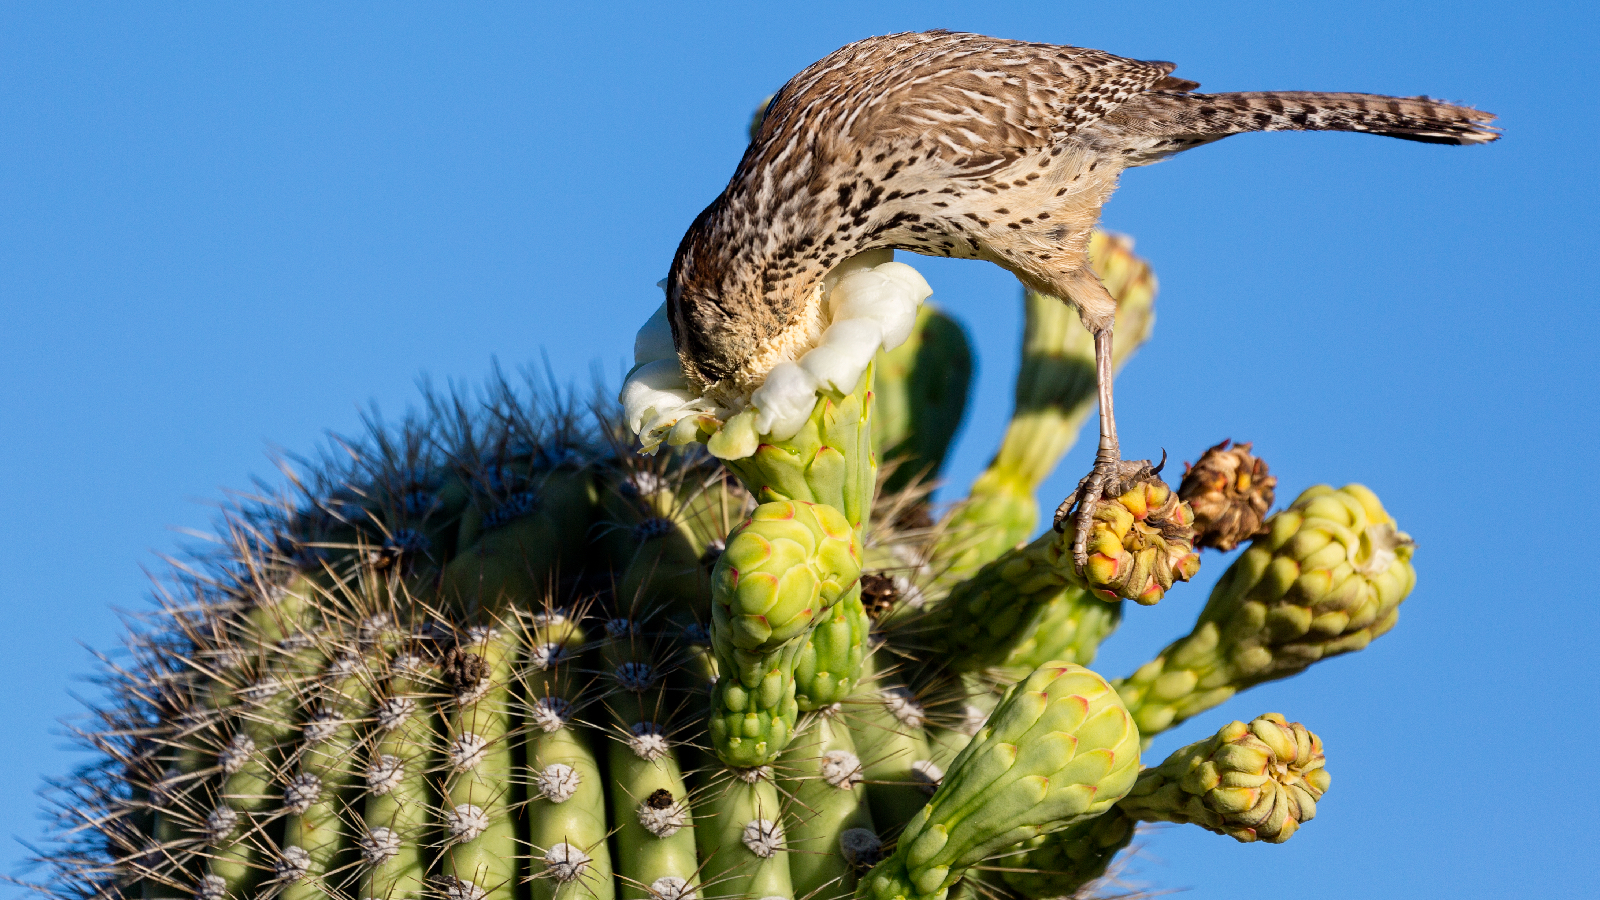 Cactus wren on saguaro